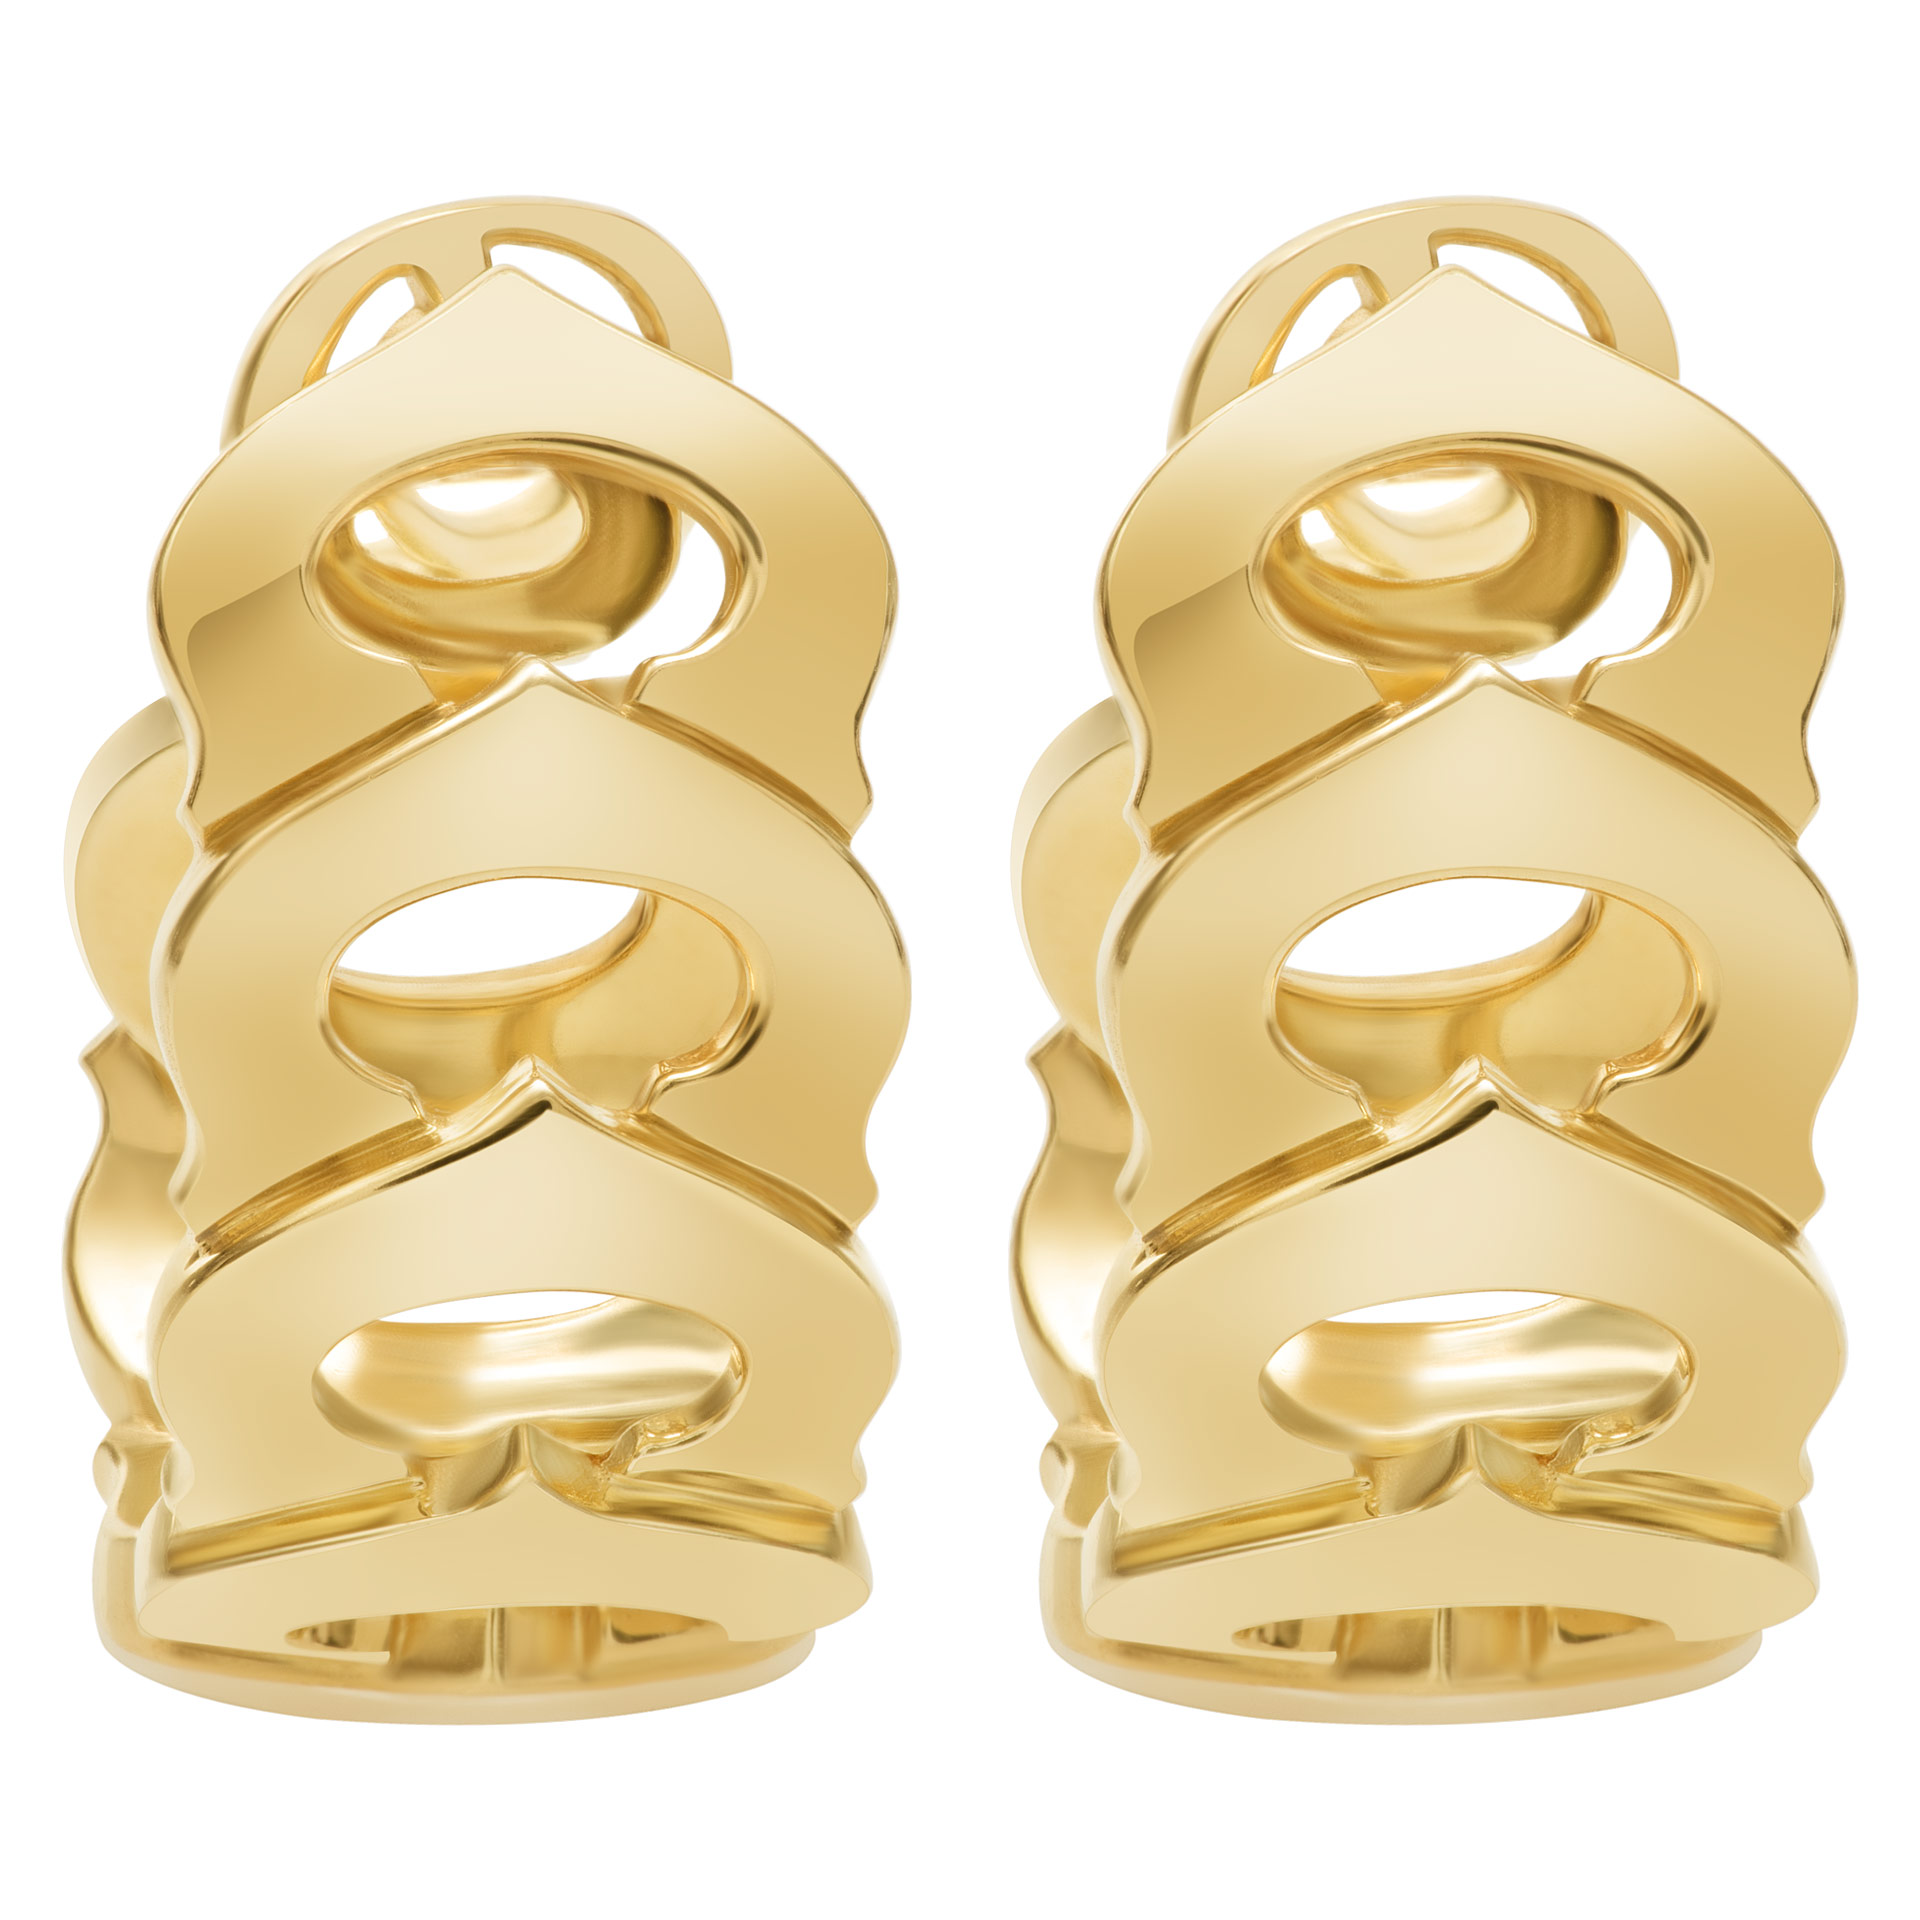 Cartier "C de Cartier" oval hoop earrings in 18k